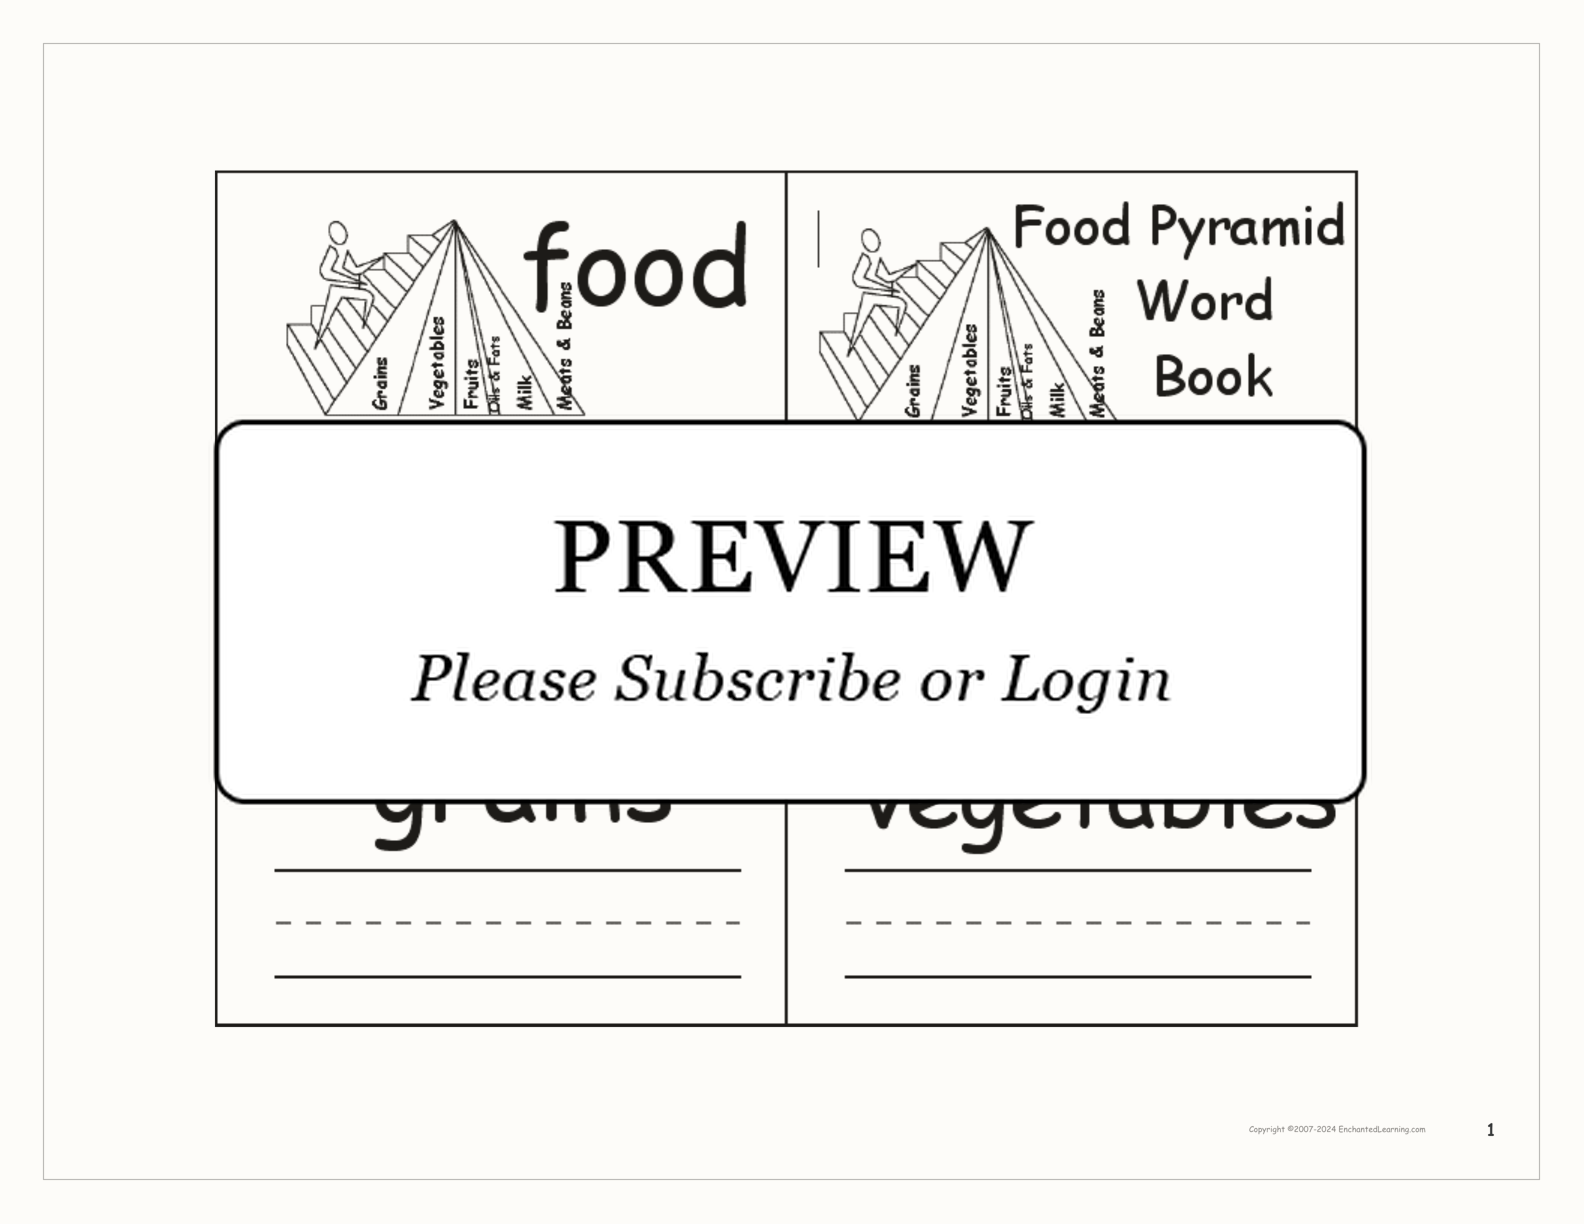 Food Pyramid Word Book interactive printout page 1